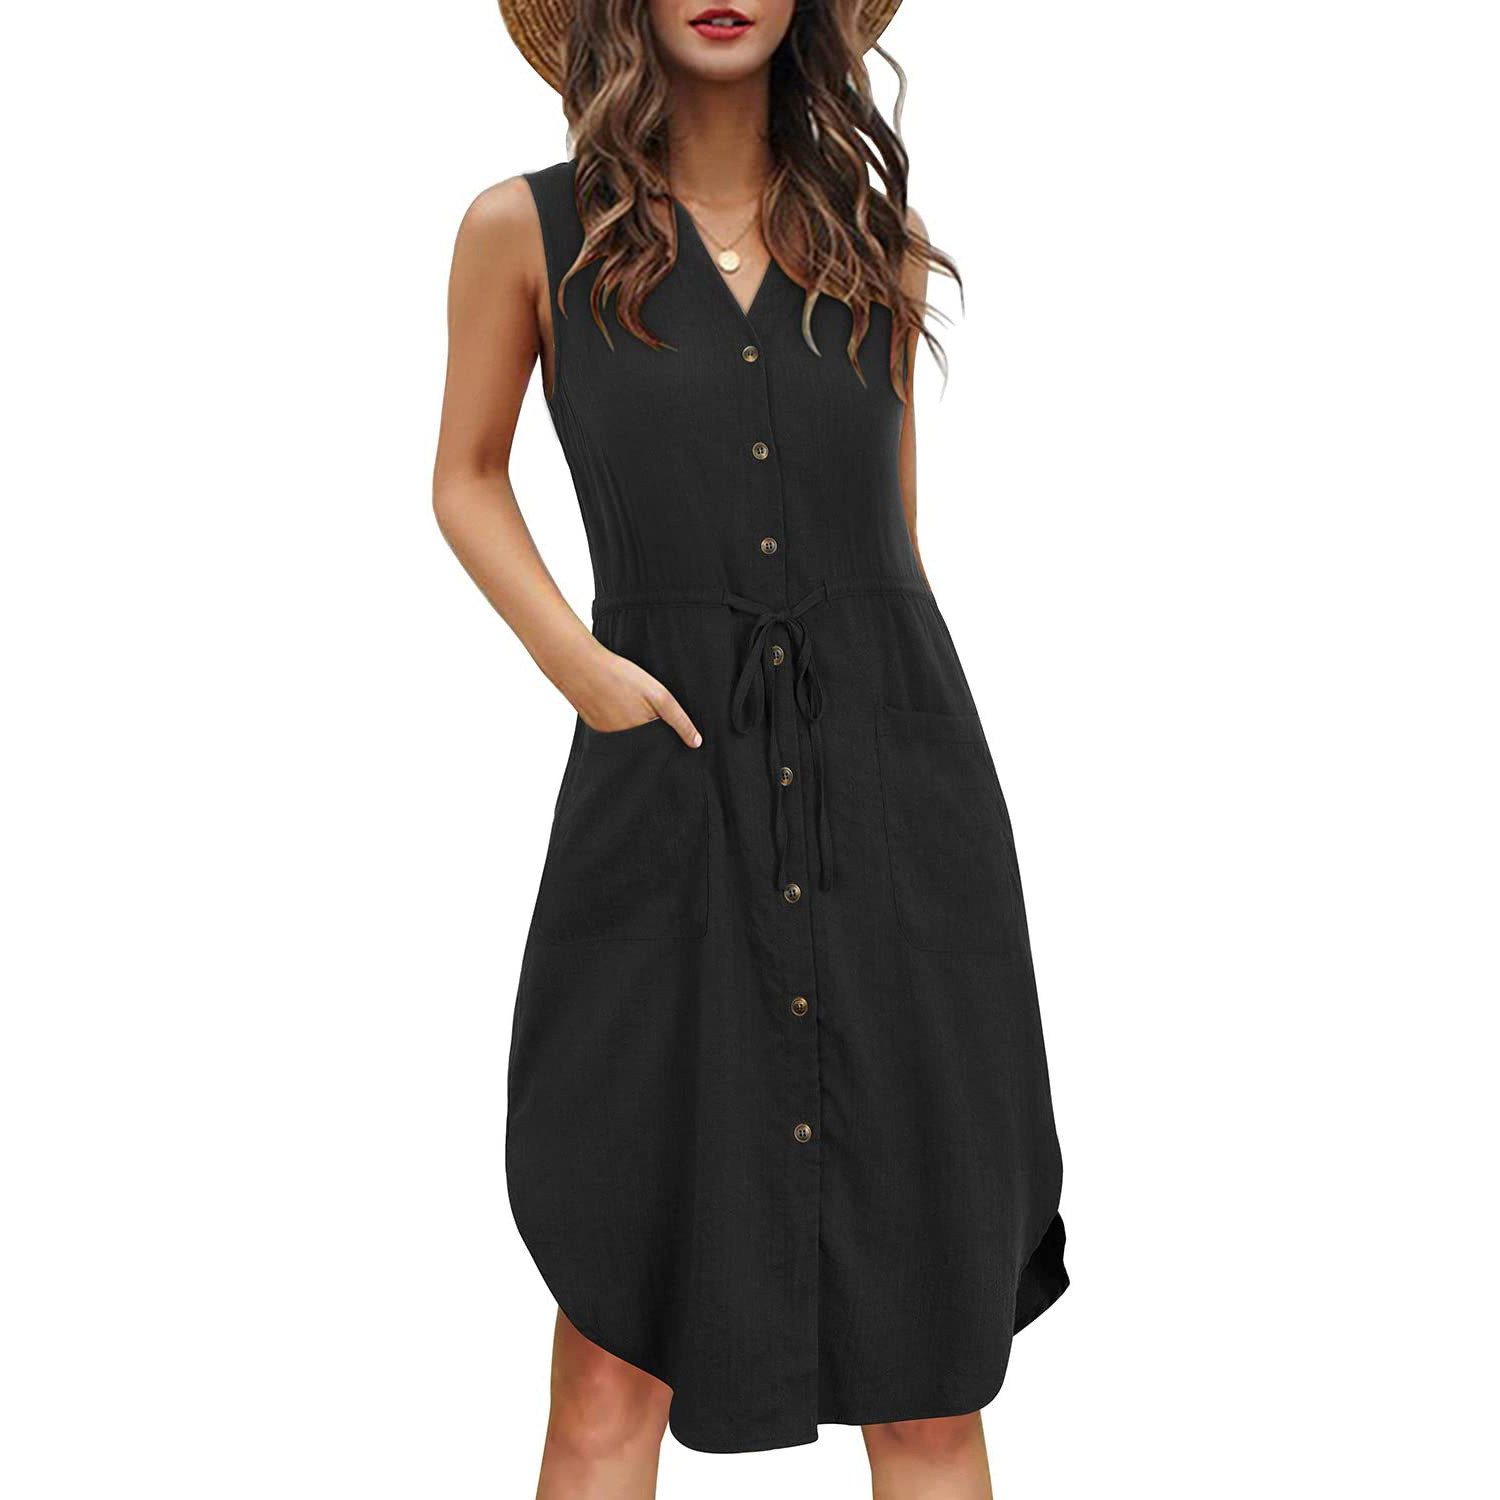 New Sling Button Pocket Dress - Black, S